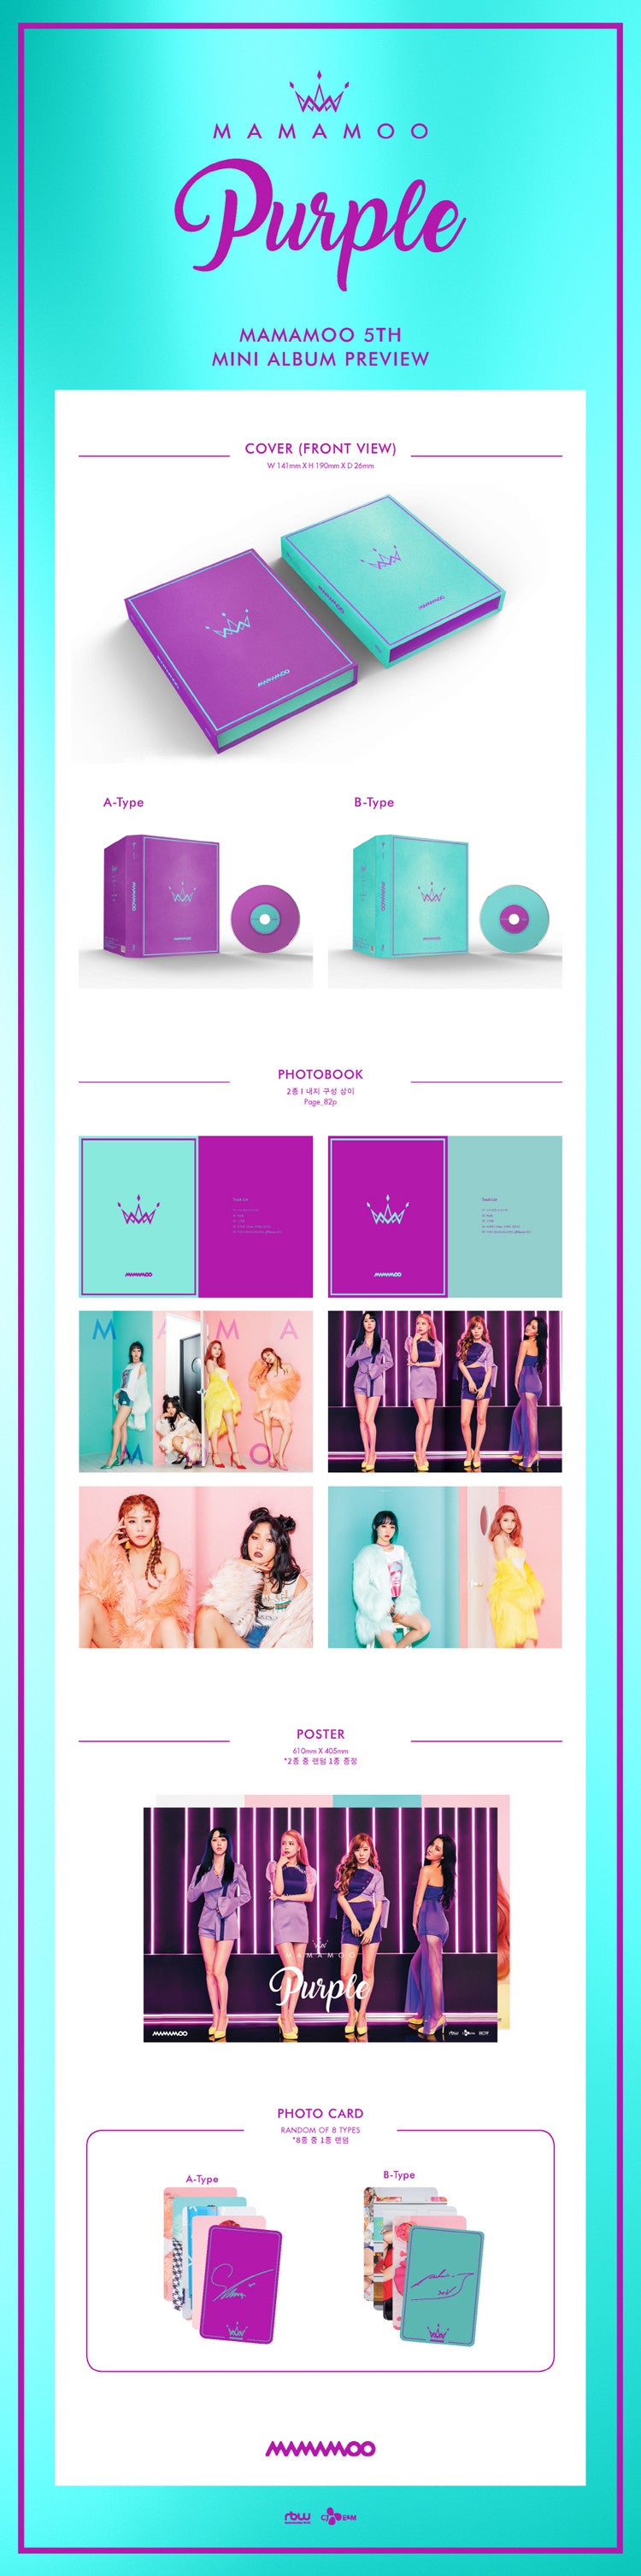 Mamamoo 5th Mini Album 나로말할것같으면  Component Cover, Photobook, Poster, Photo Card  Country Of Origin Republic Of Korea